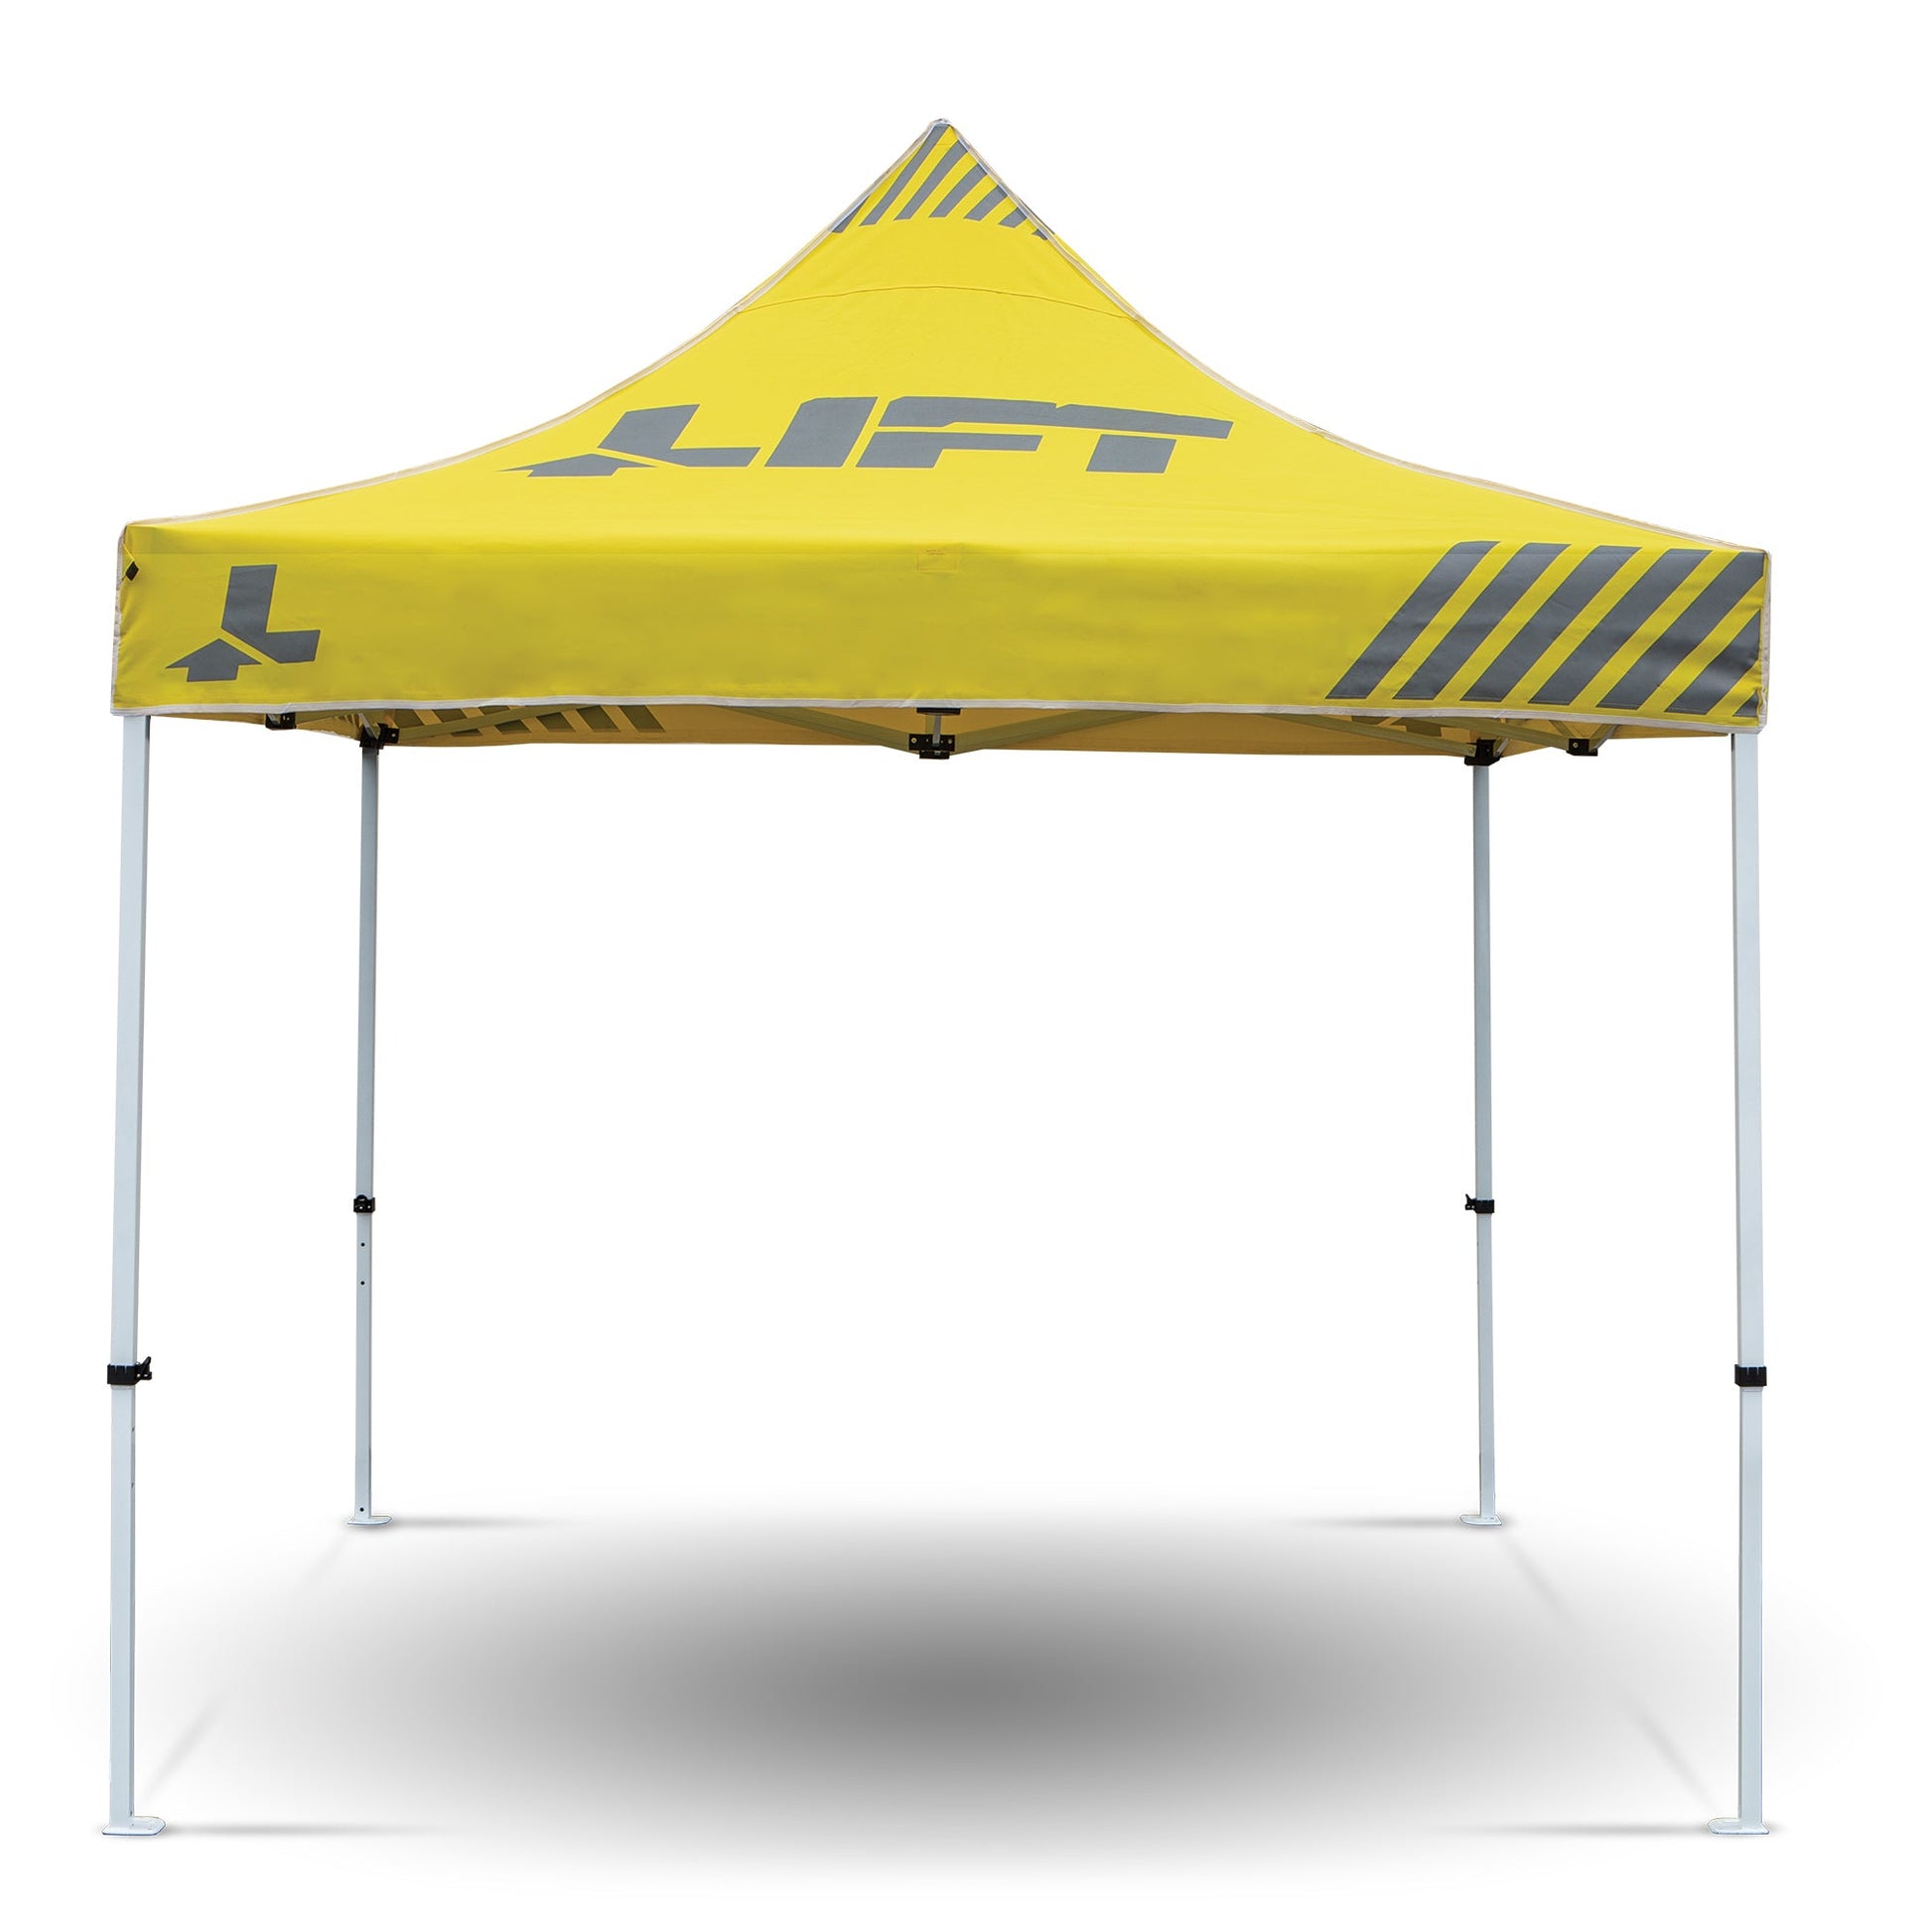 LIFT Safety - LIFT Safety Canopy